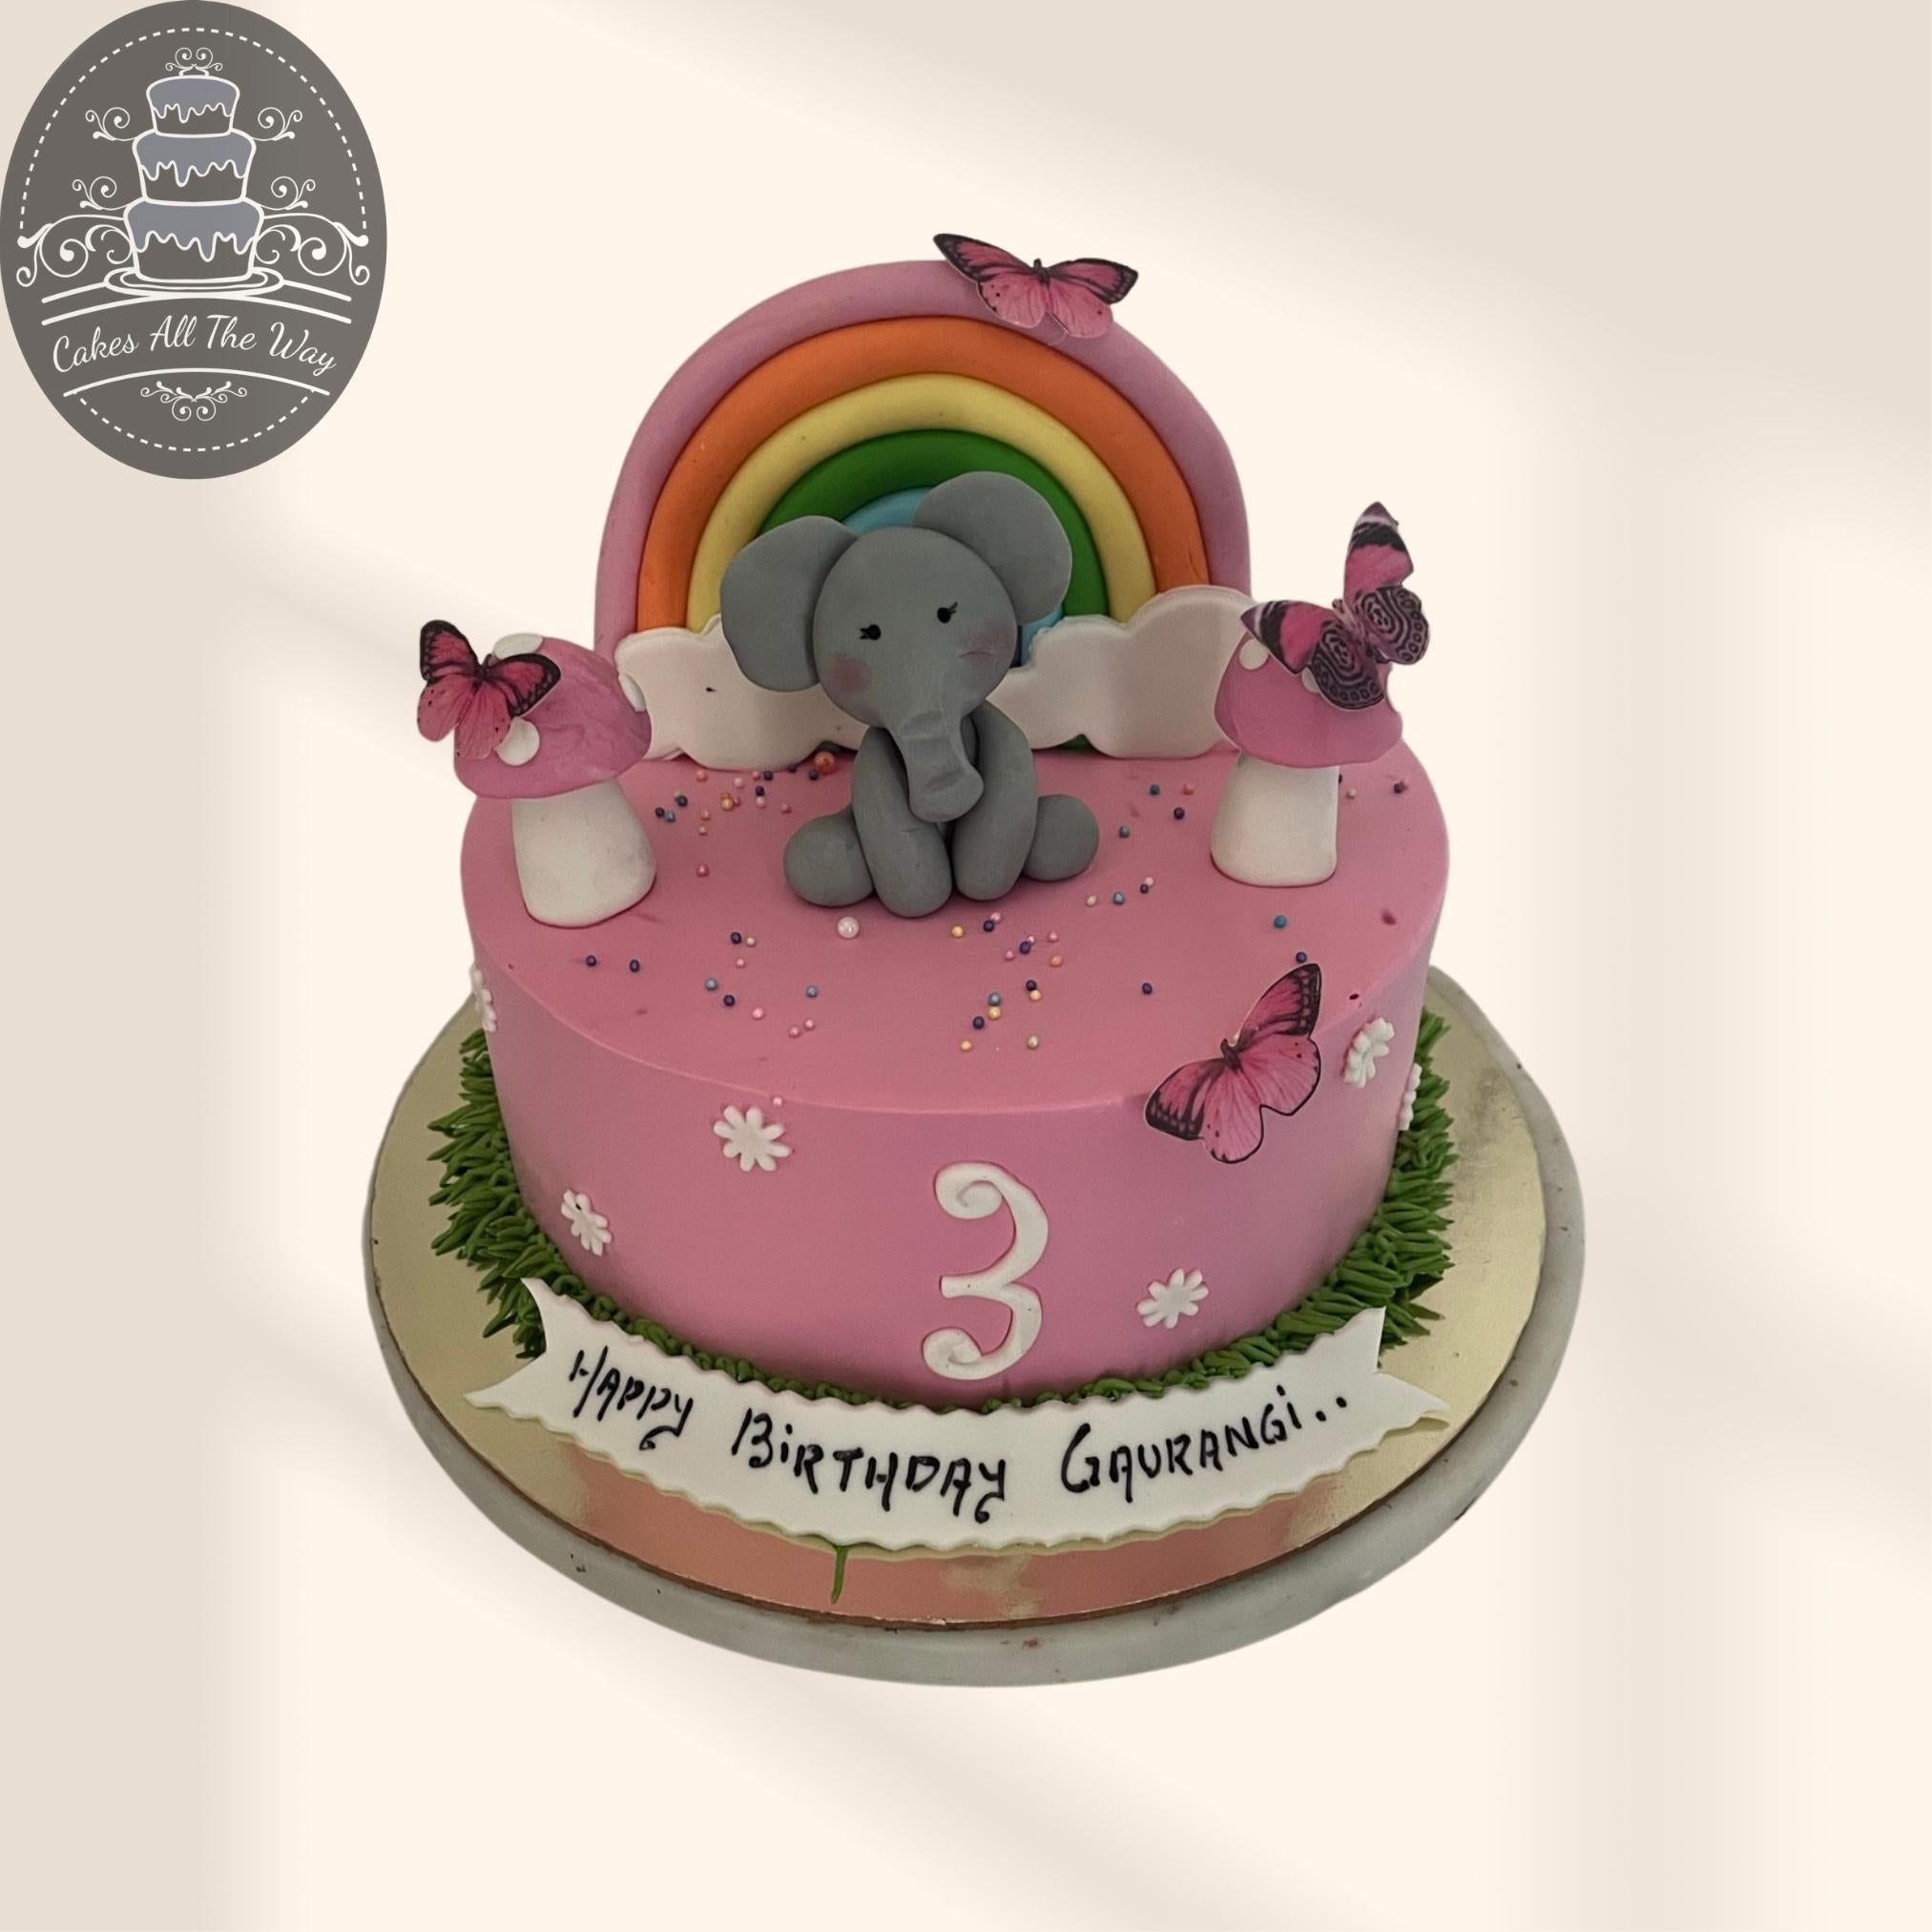 i heart baking!: elephant birthday cake